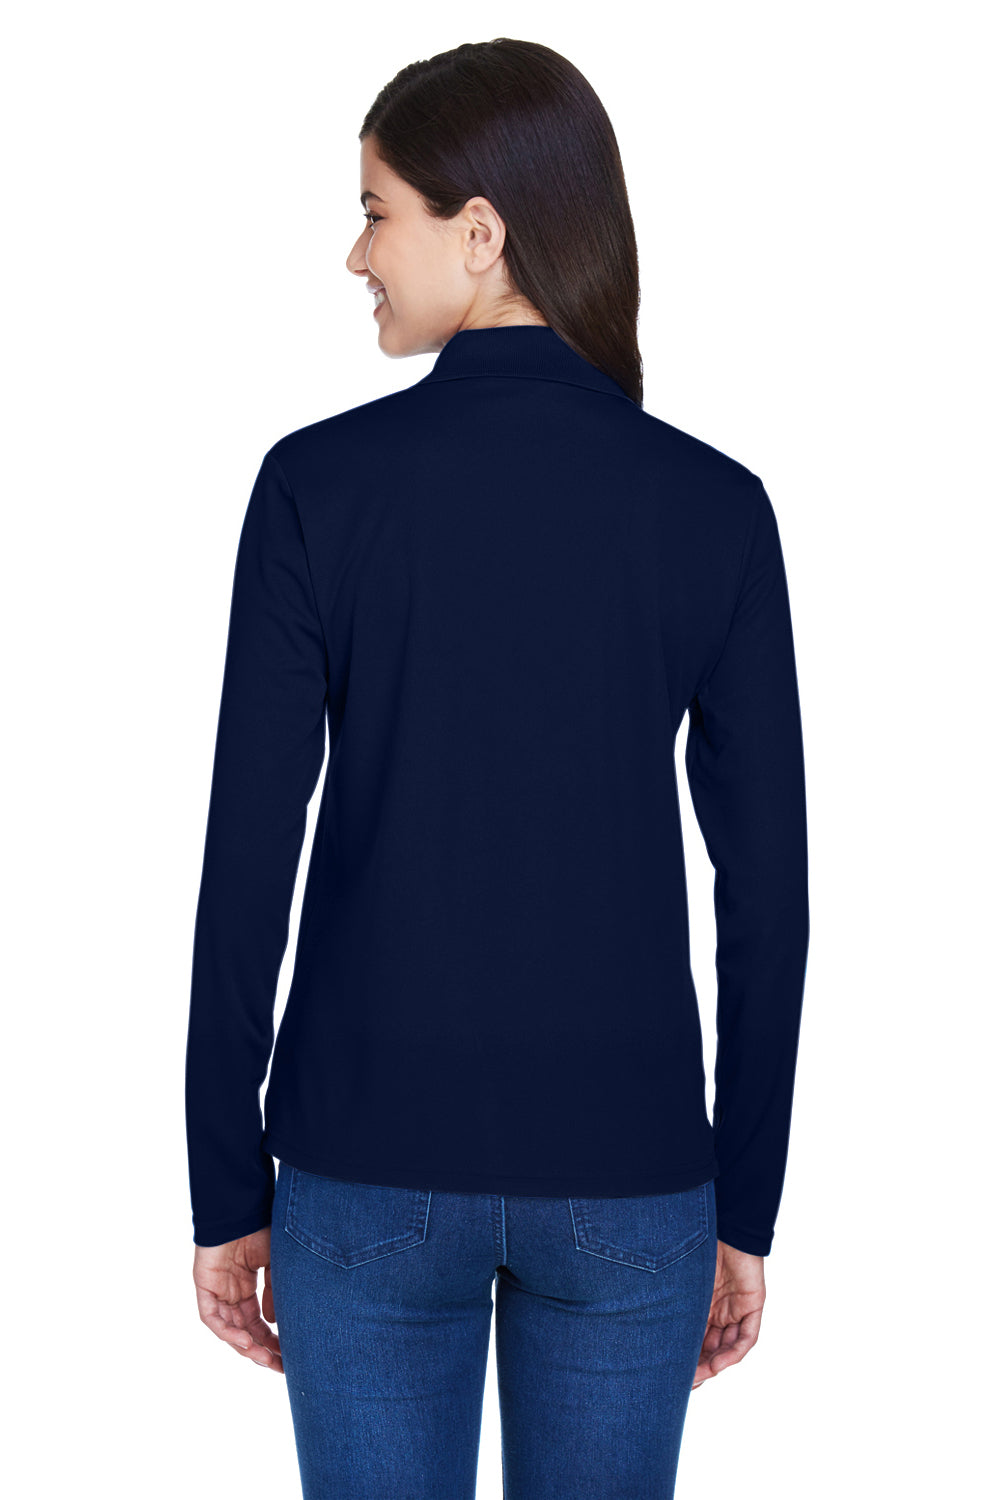 Core 365 78192 Womens Pinnacle Performance Moisture Wicking Long Sleeve Polo Shirt Navy Blue Back